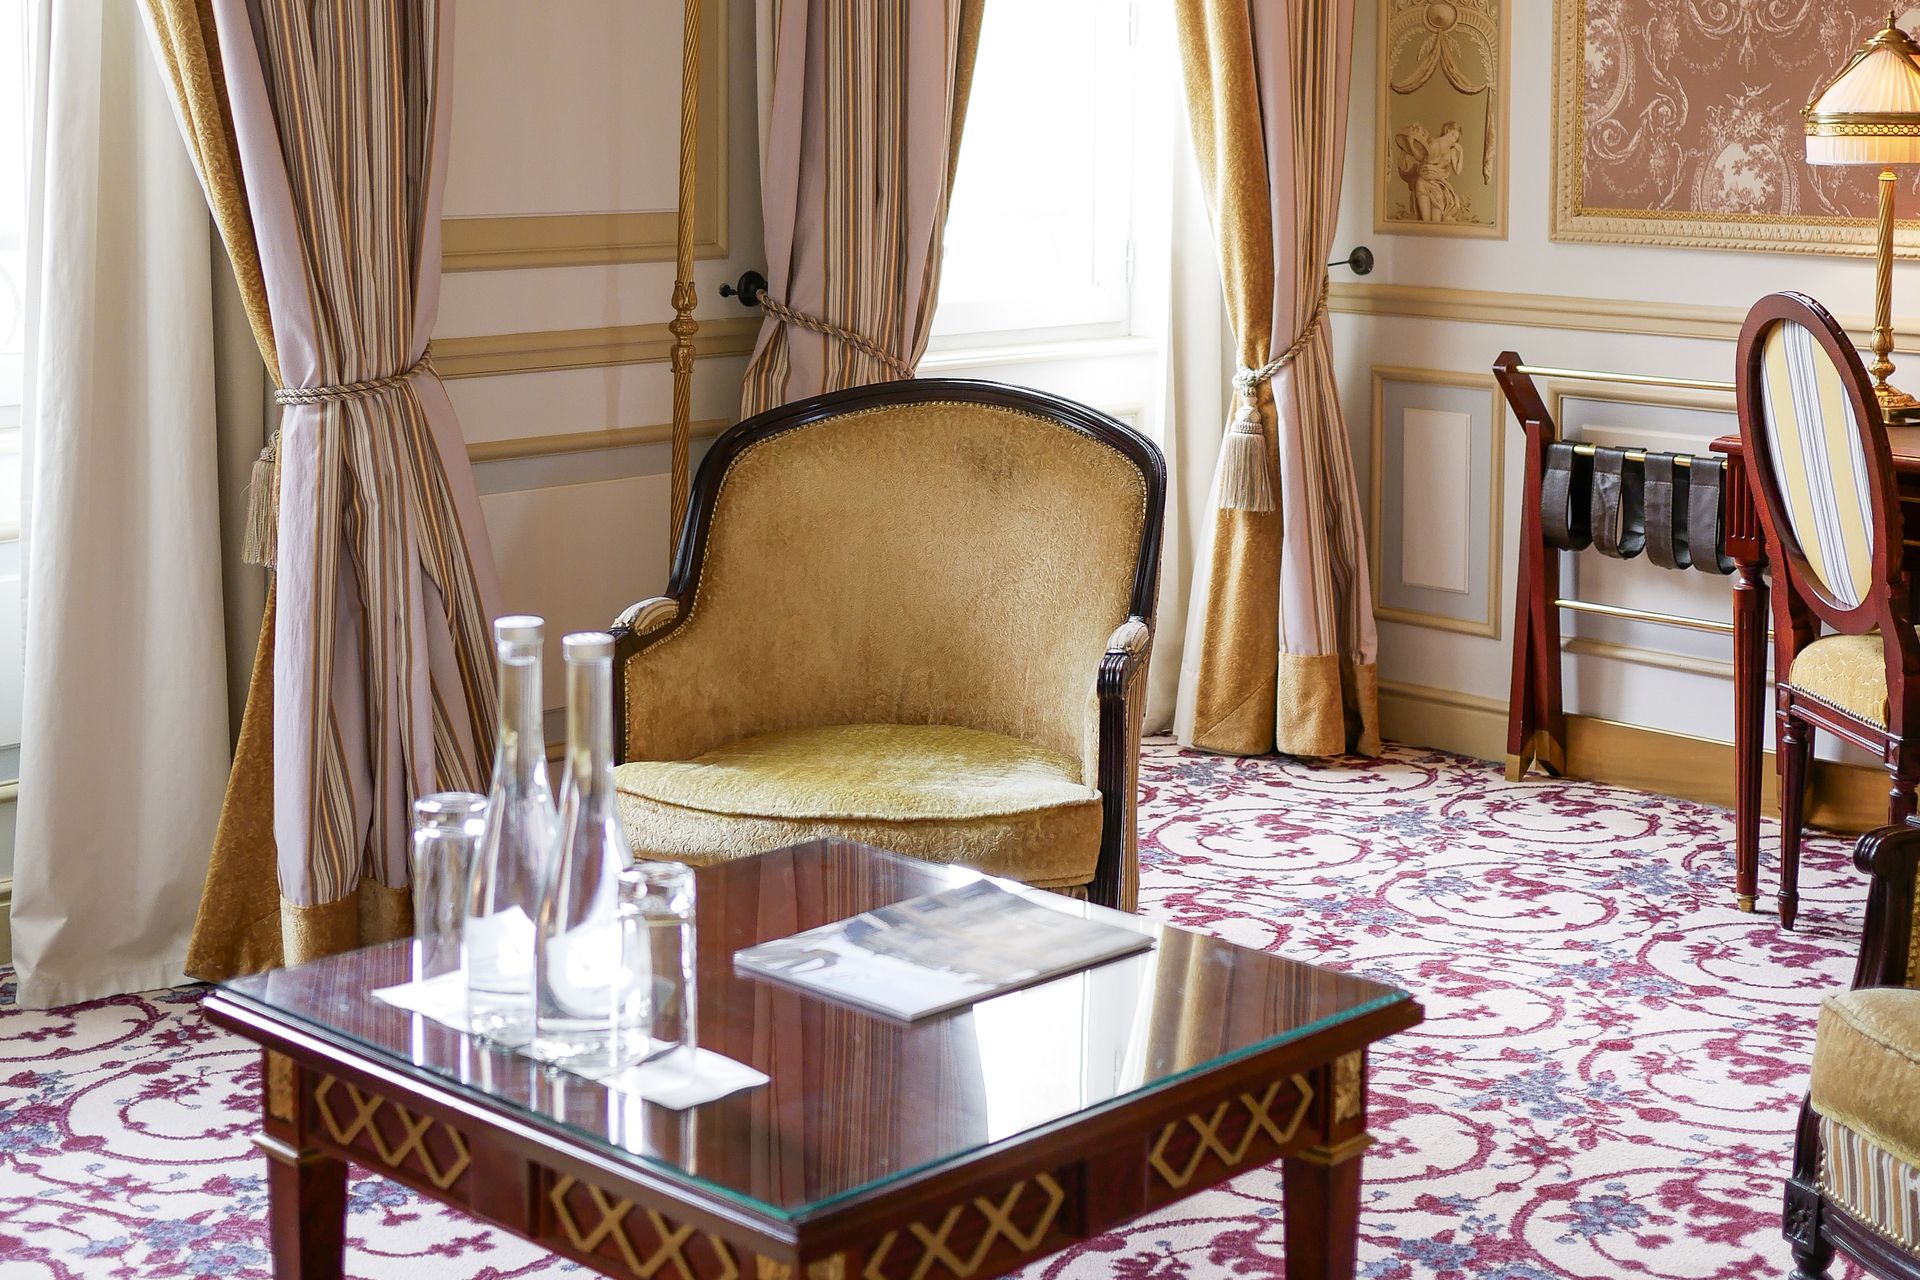 InterContinental Bordeaux - Le Grand Hotel - Junior Suites 2